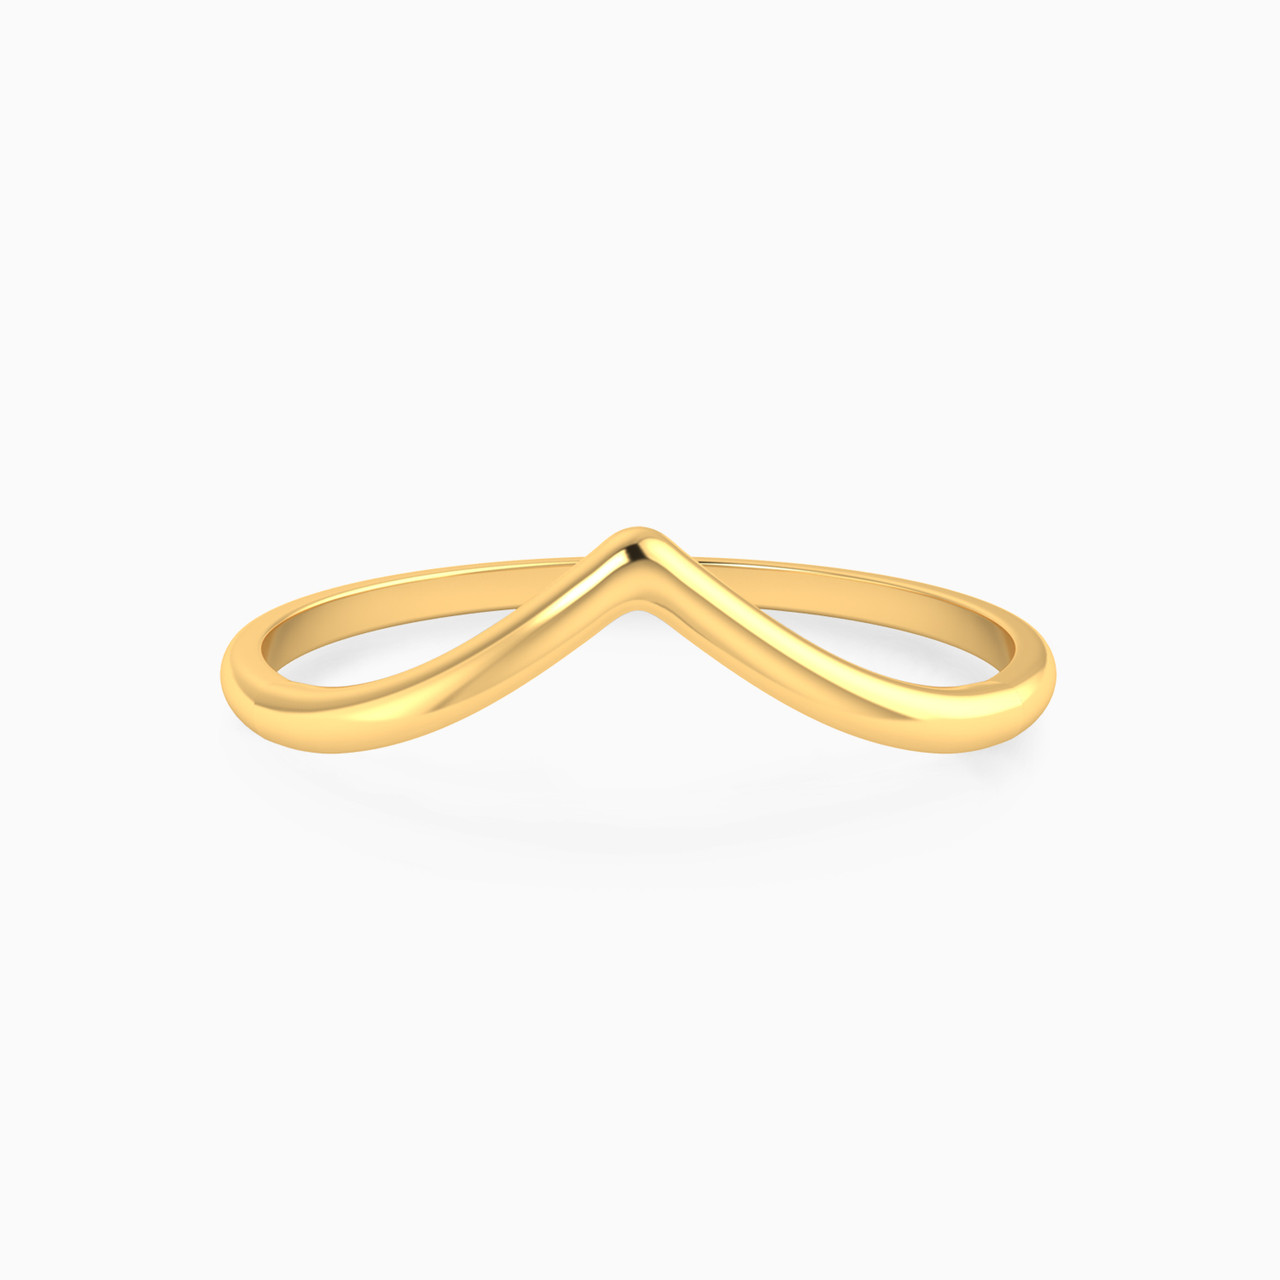  V Shaped Statement Ring in 14K Gold